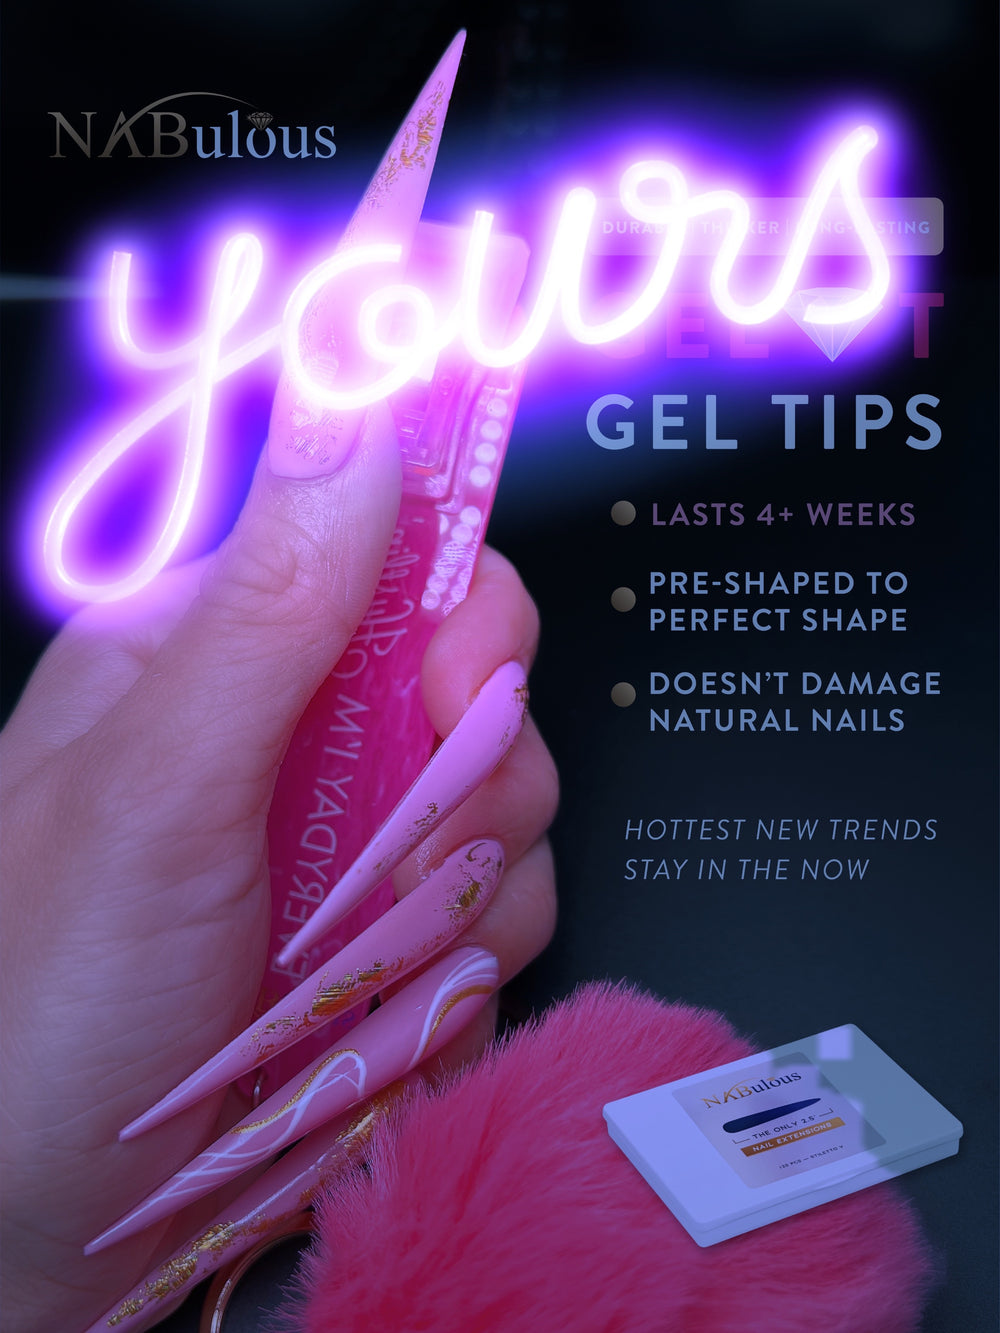 Nabulous Card Grabber for Long Nails | Credit Card Puller | ATM Debit Card Clip Keychain with Pom Pom-Sanitary Card Grabber